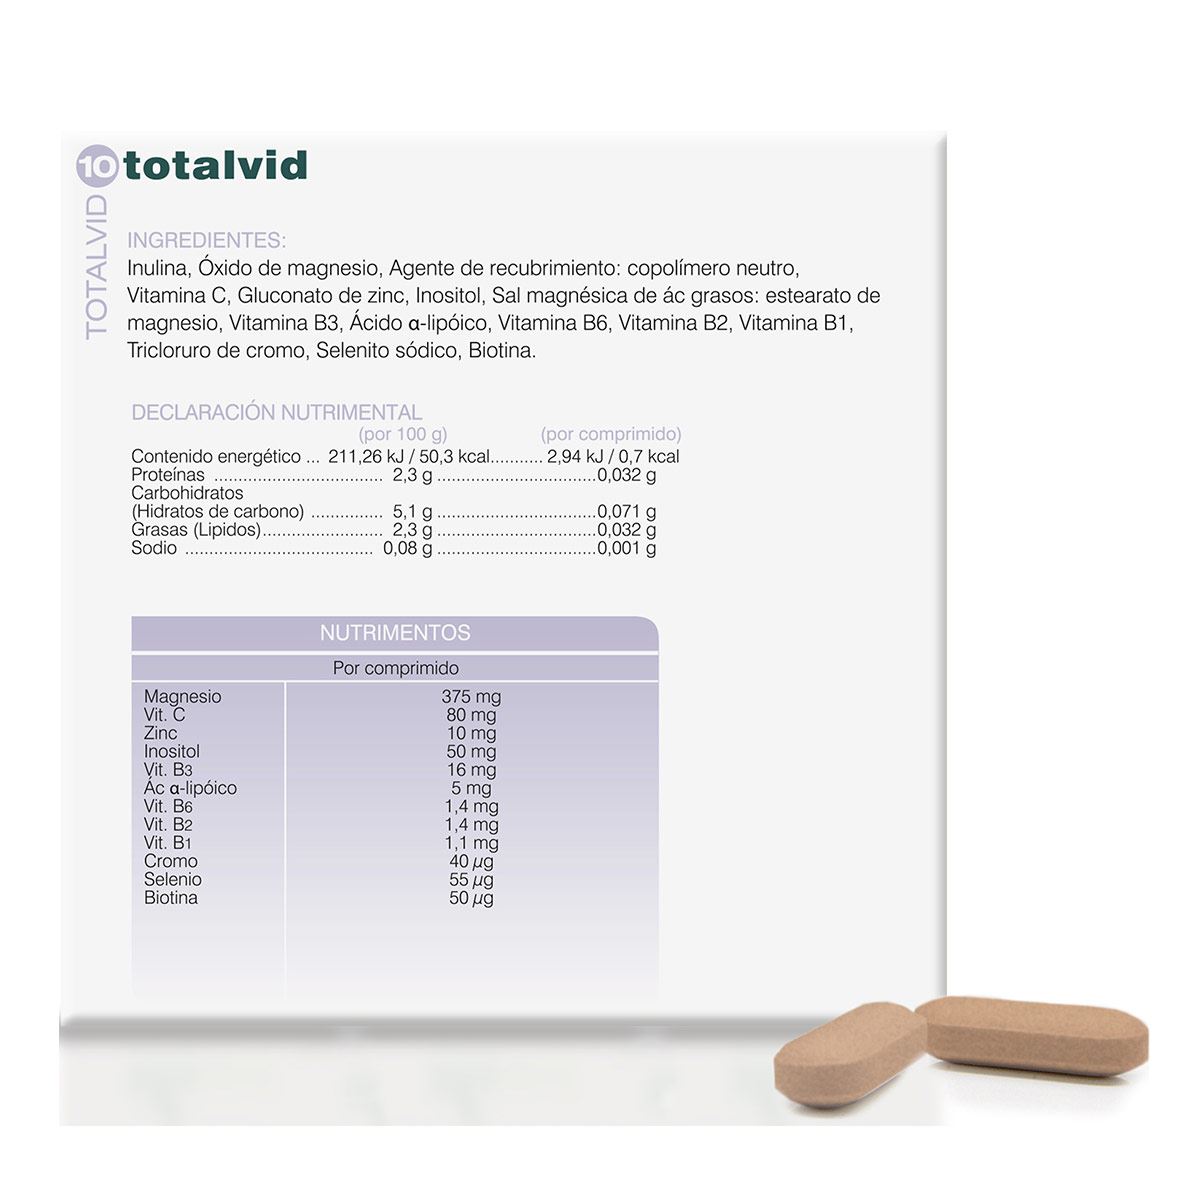 Suplemento Totalvid 10&#44; 28 comprimidos Soria Natural